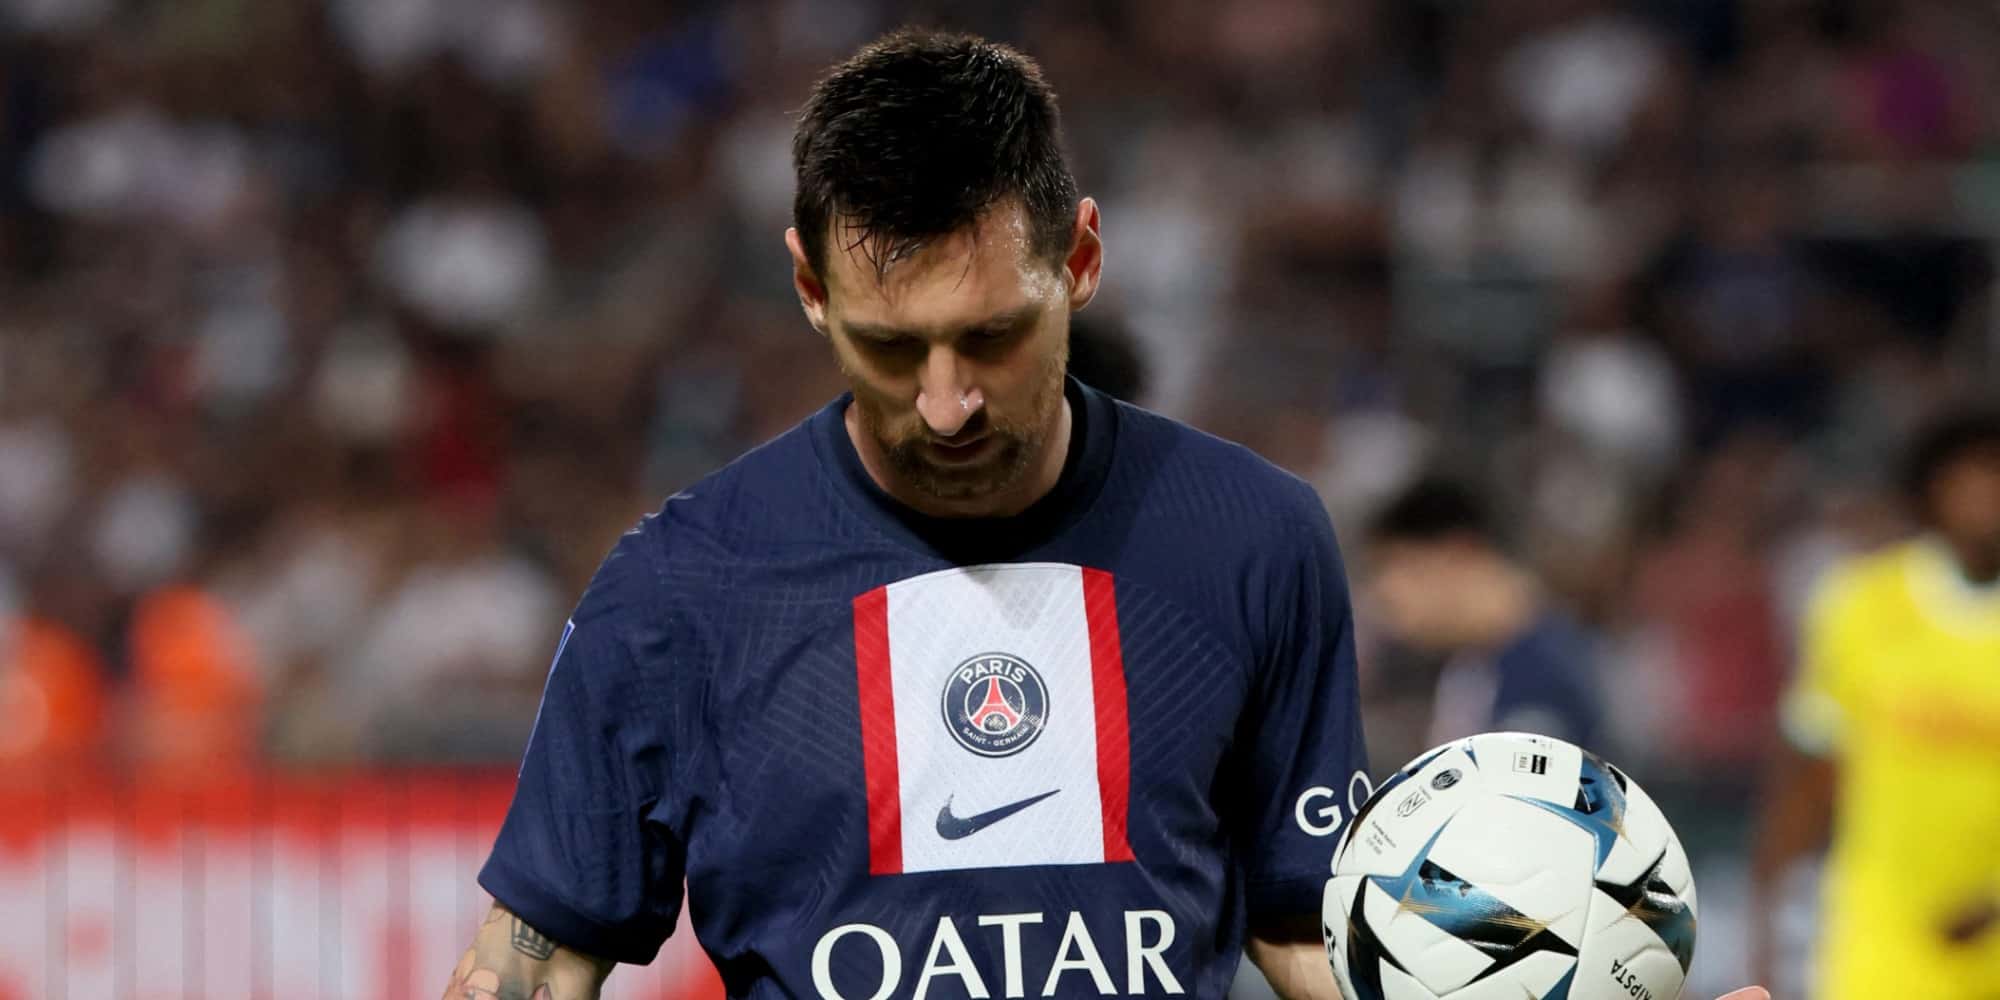 Ligue 1 On ne touche pas a Messi s emporte Kombouare 1